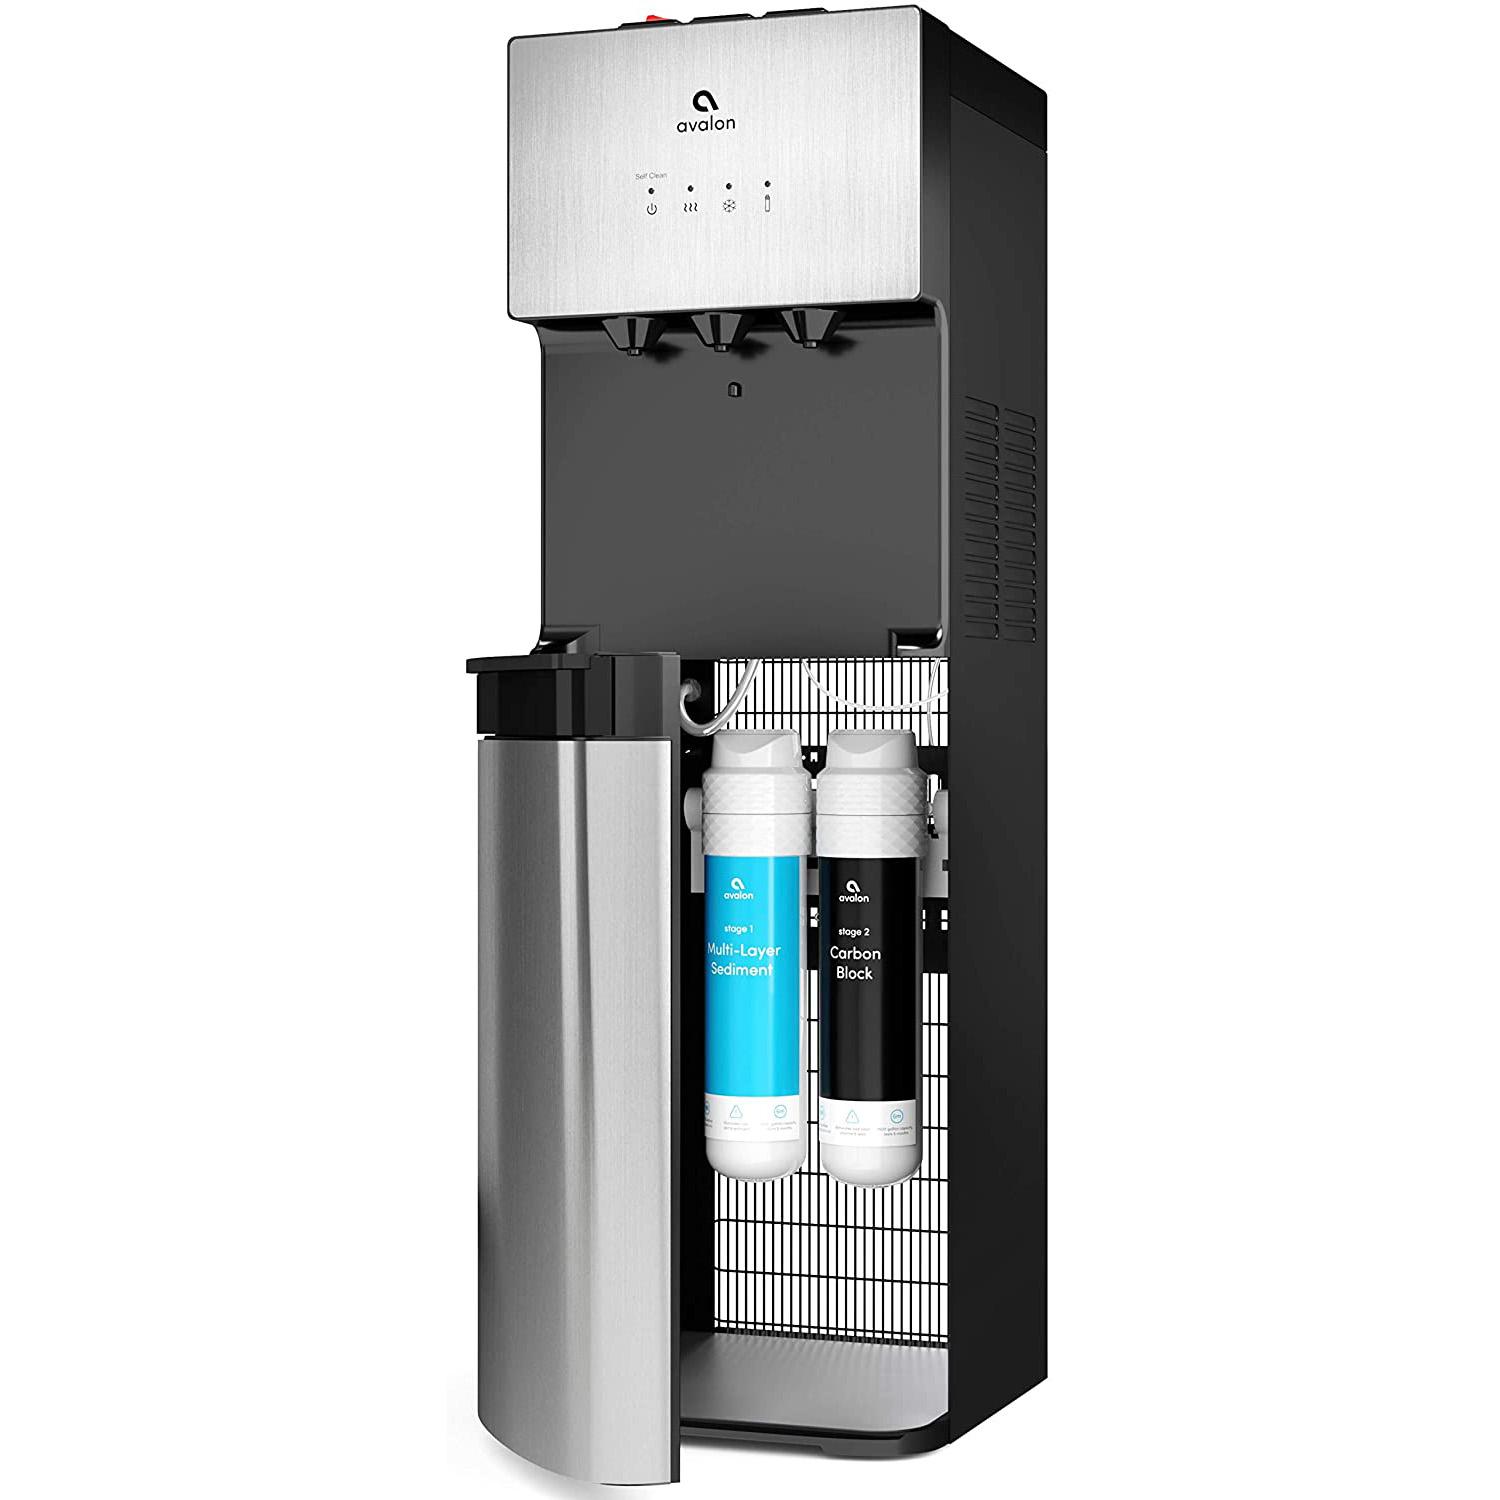 Avalon A5 Self Cleaning Bottleless Water Cooler Dispenser for $199.99 Shipped